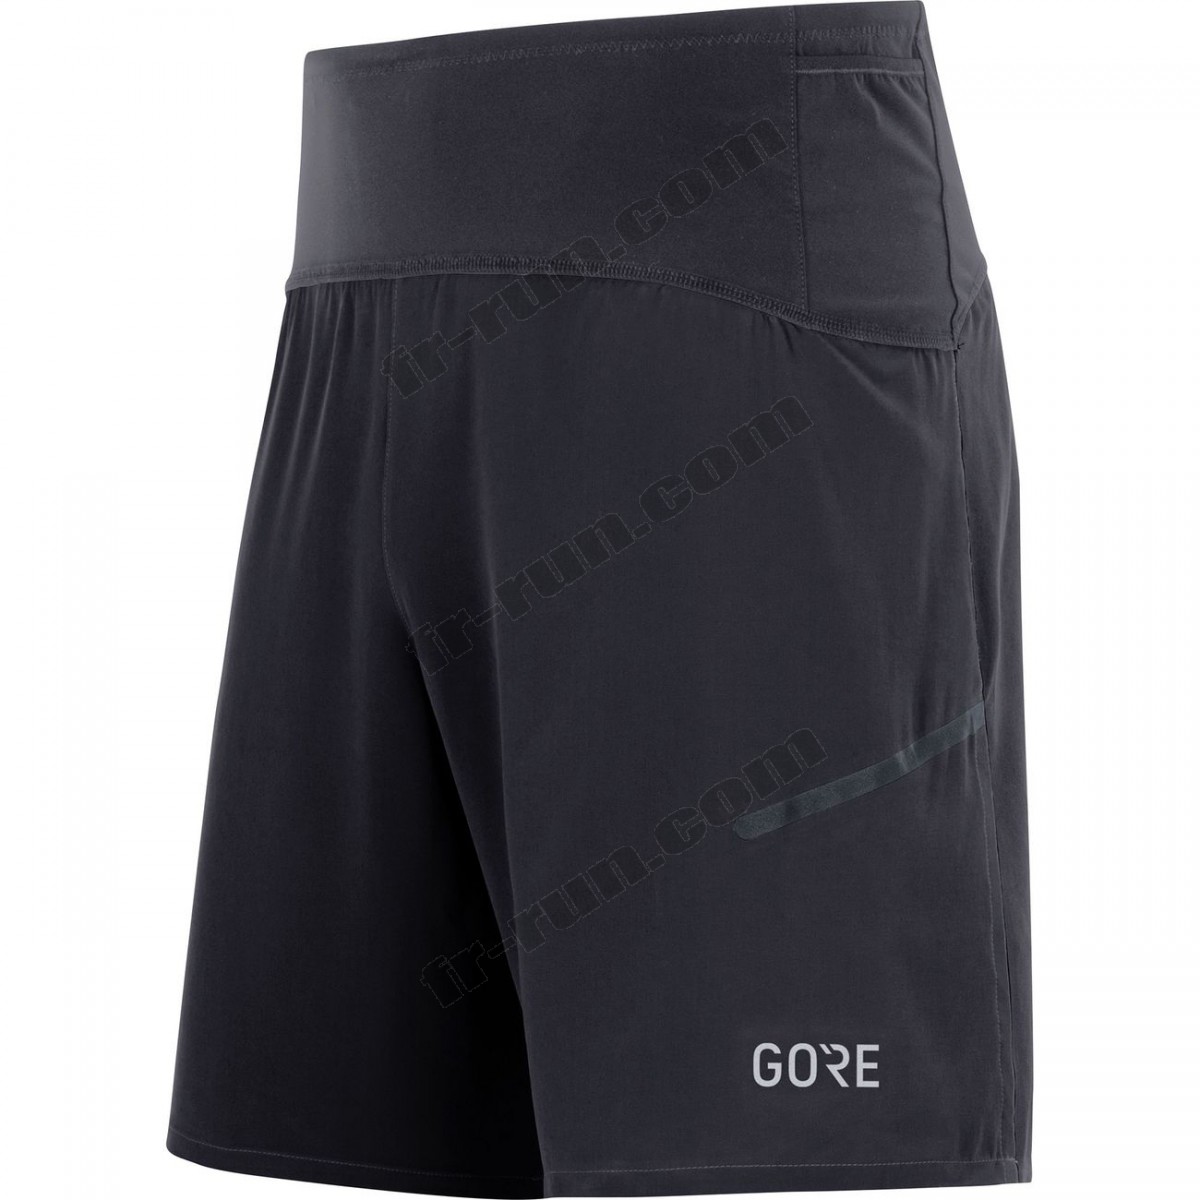 Gore/running homme GORE Gore® Wear R7 ◇◇◇ Pas Cher Du Tout - -0